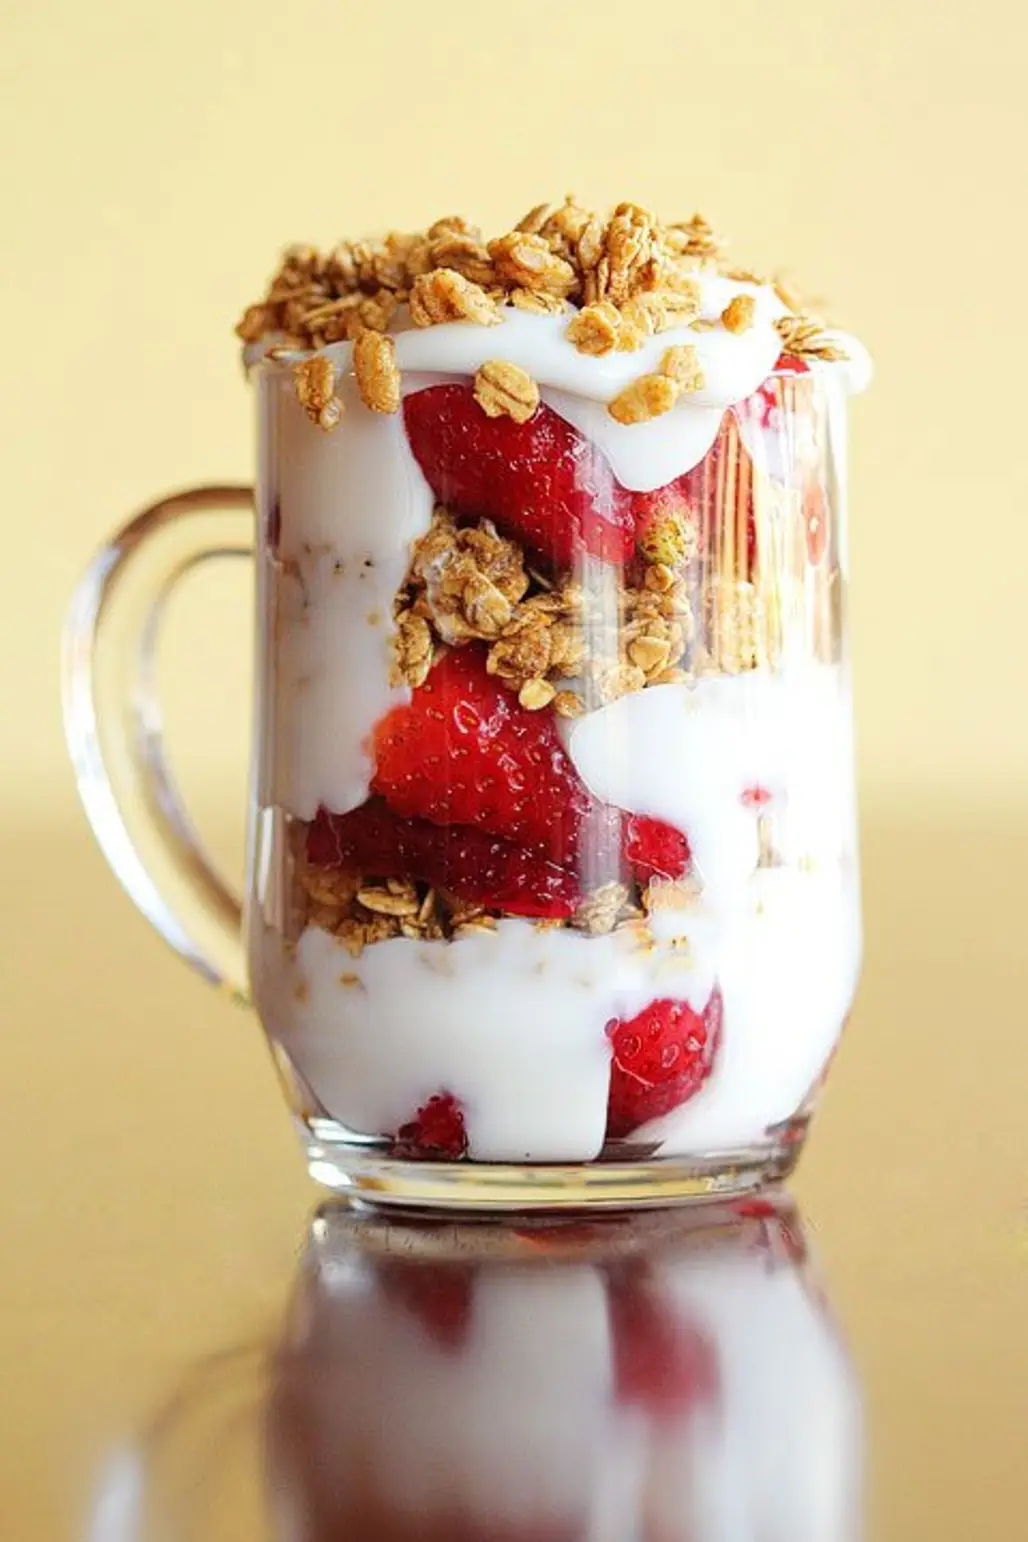 Yogurt-fruit-granola Parfait